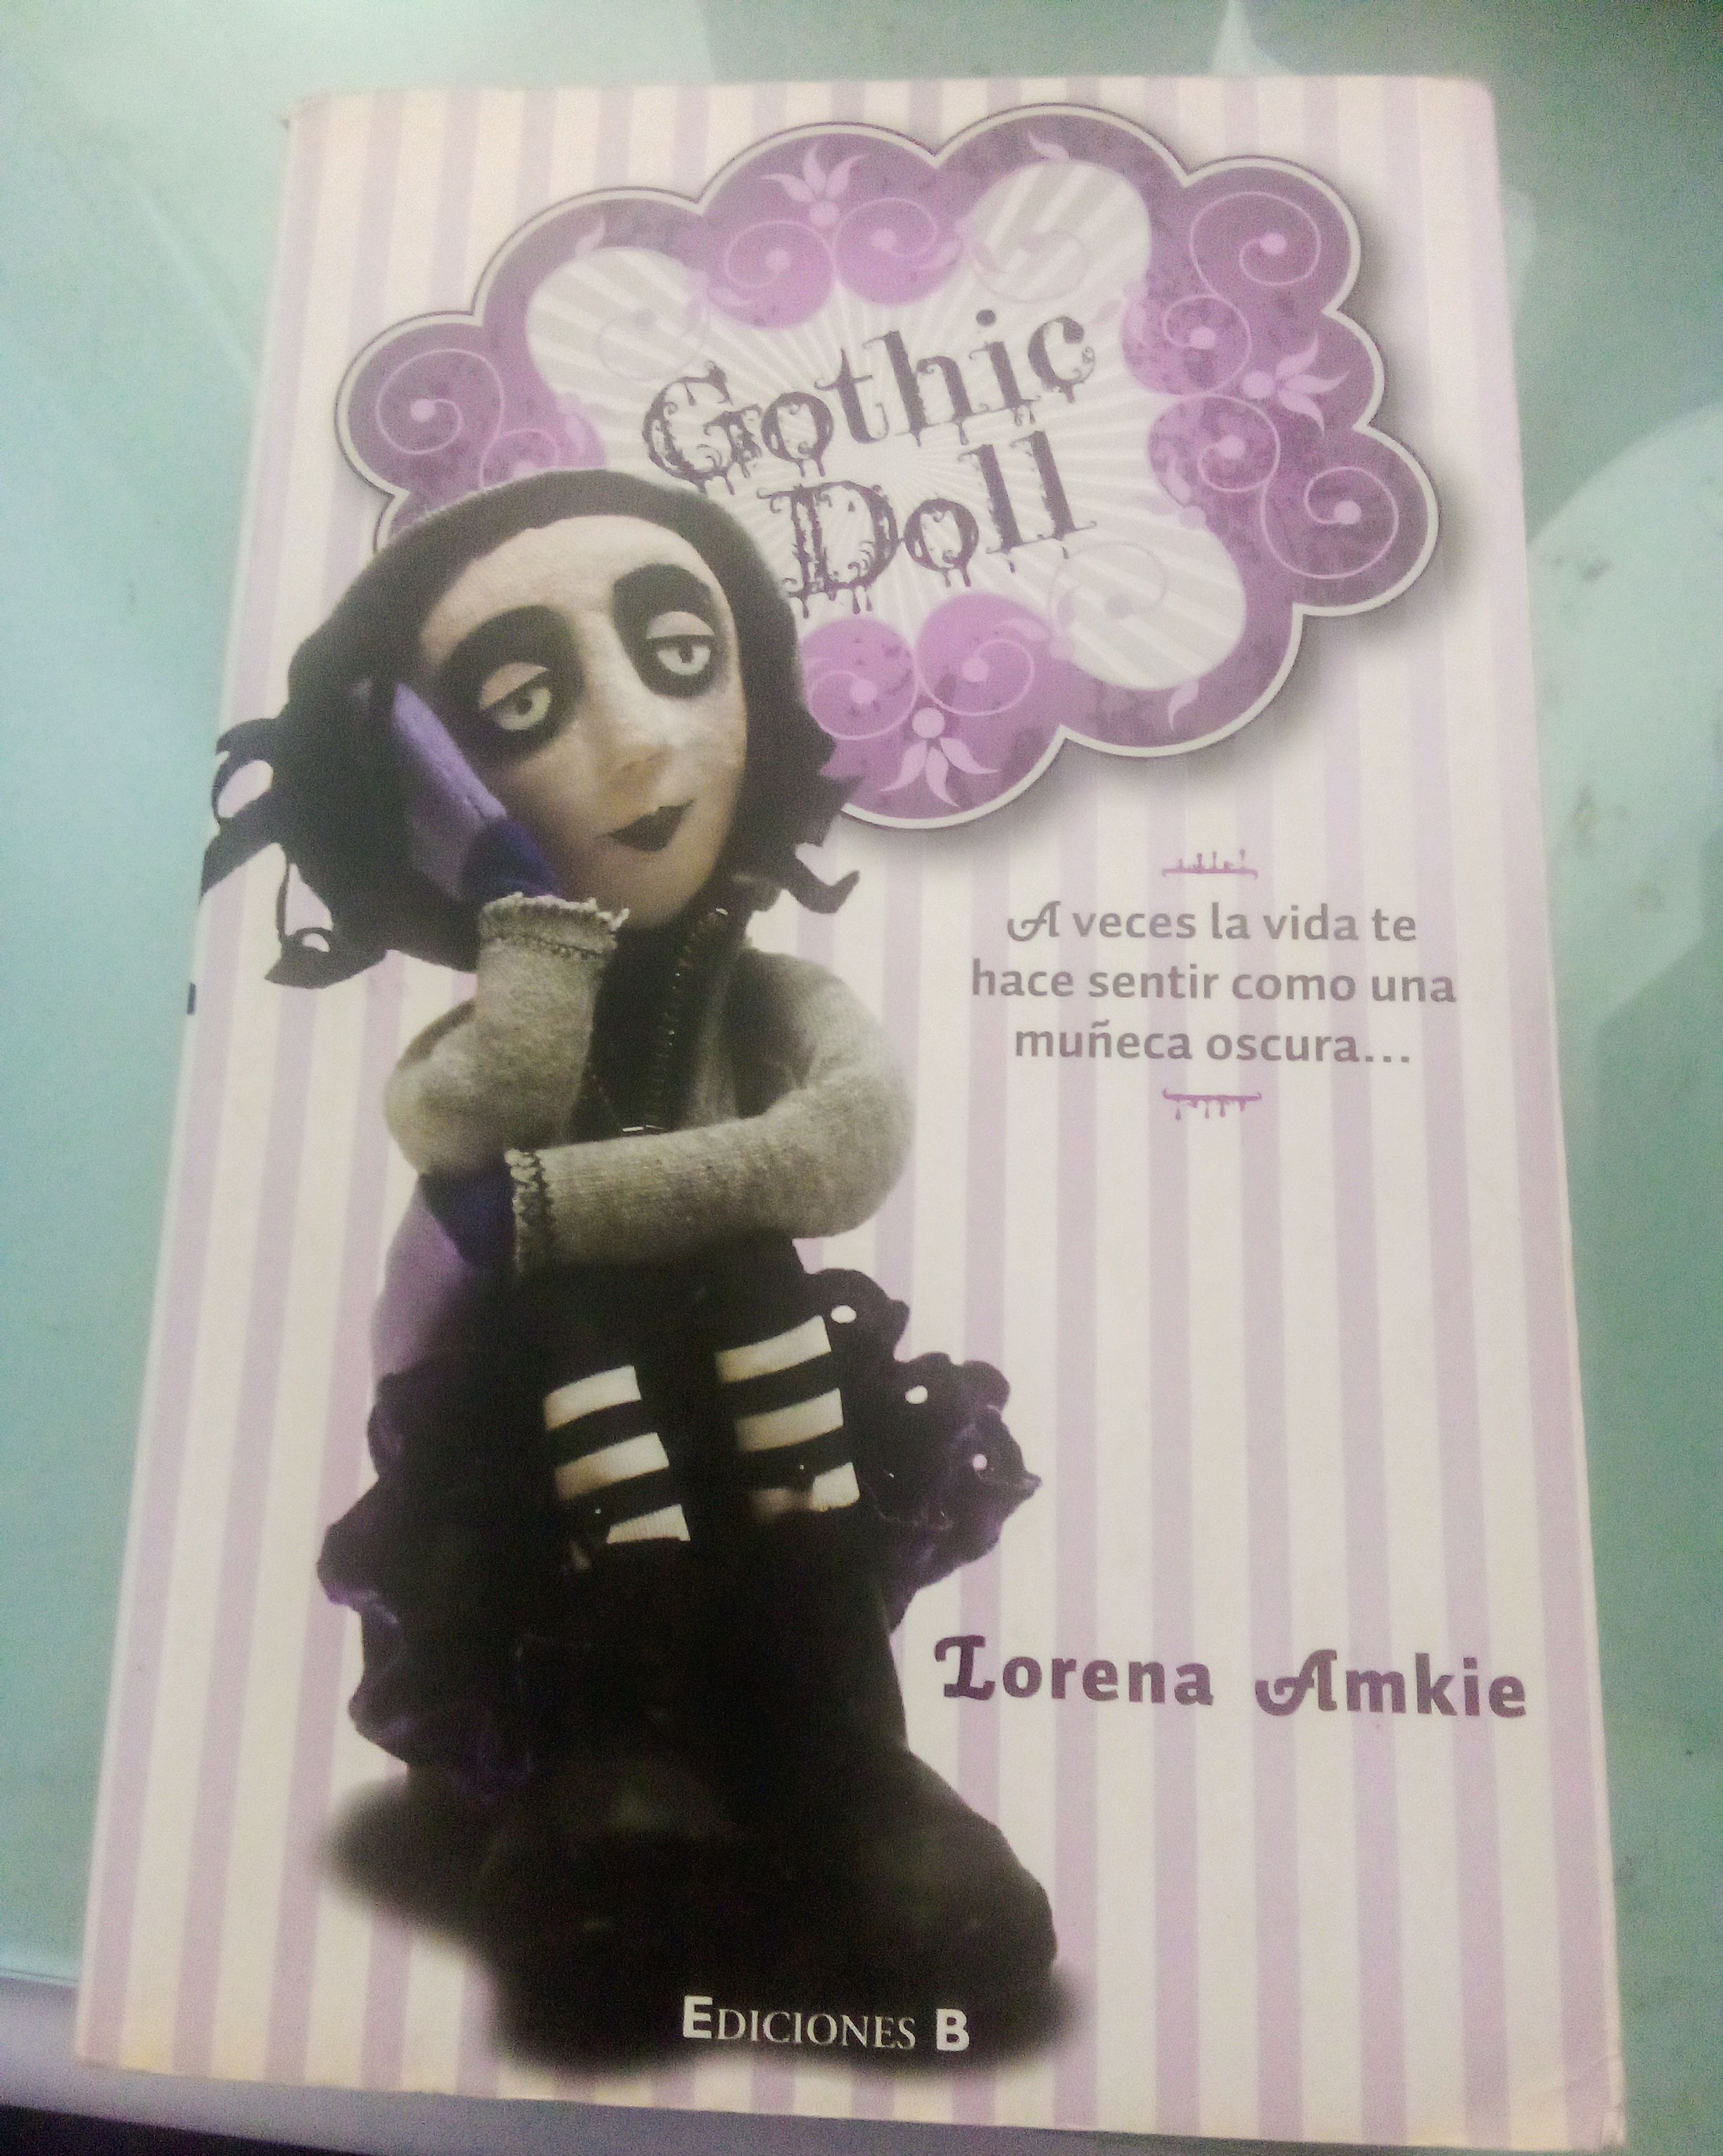 Gothic Doll